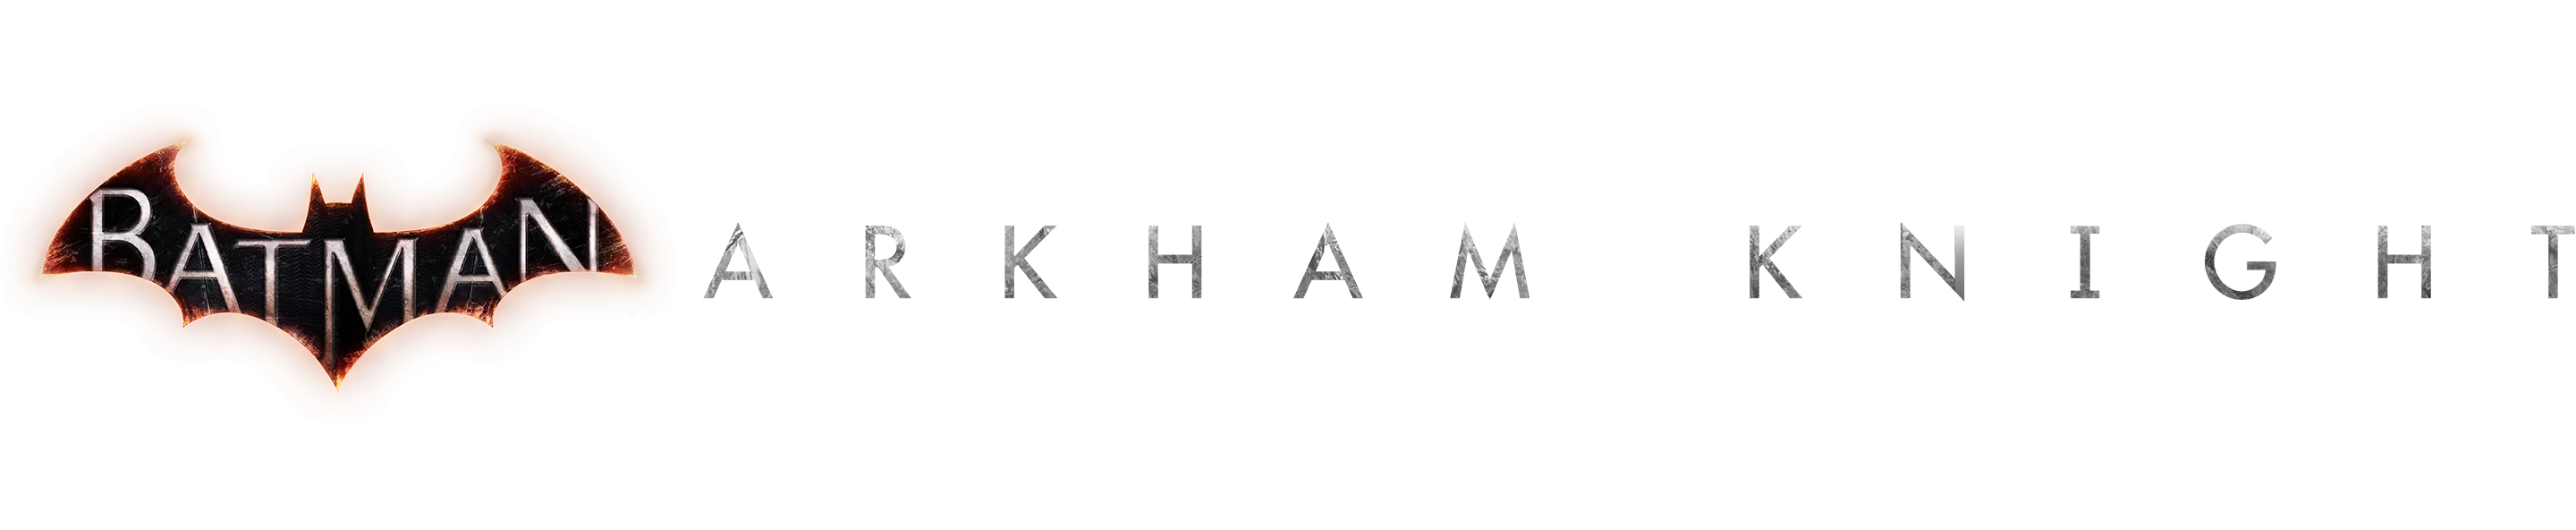 BATMAN™: ARKHAM KNIGHT